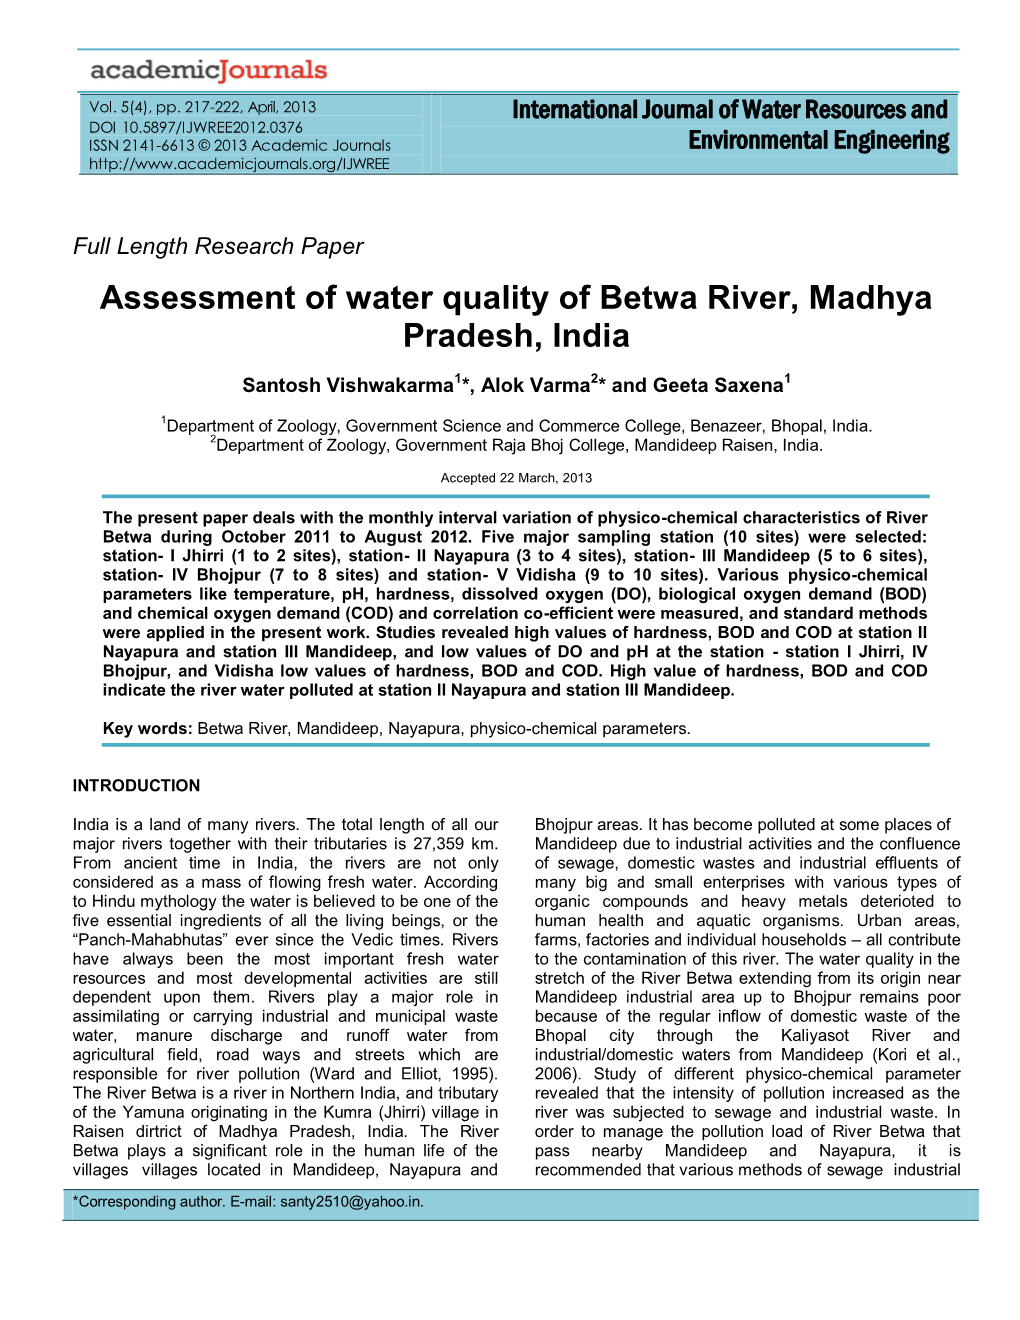 Assessment of Water Quality of Betwa River, Madhya Pradesh, India